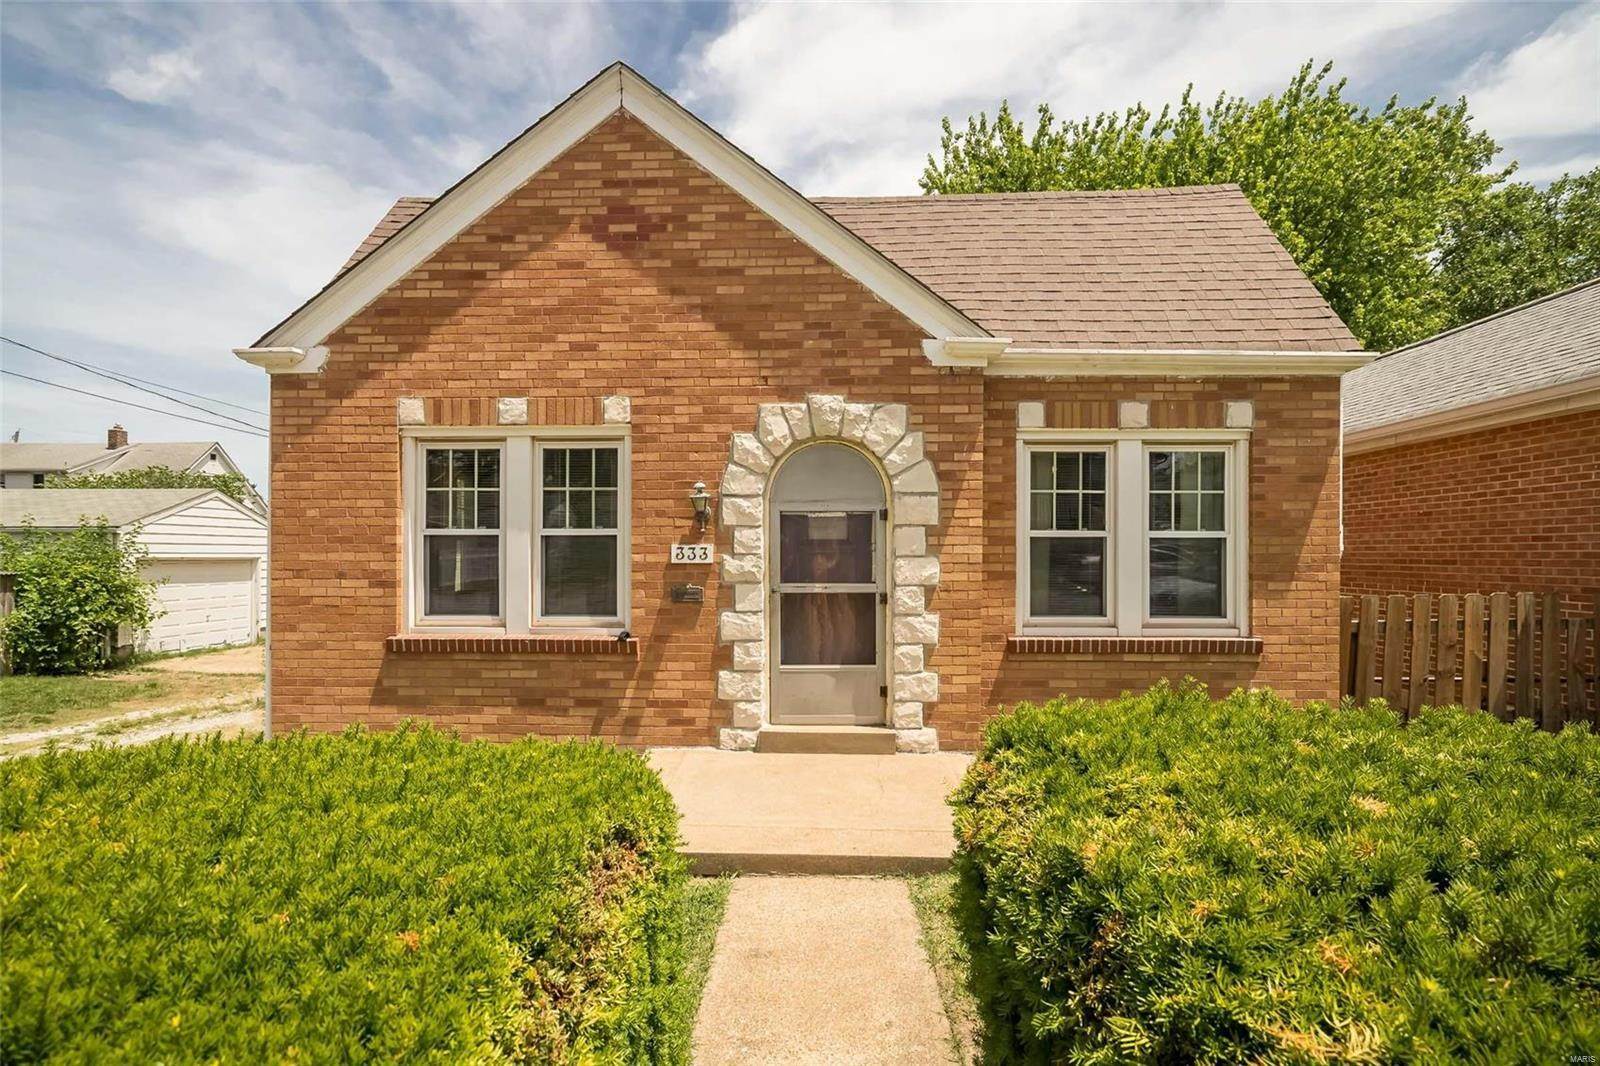 Property for Sale at 333 Degenhardt Avenue St. Louis, Missouri 63125 United States